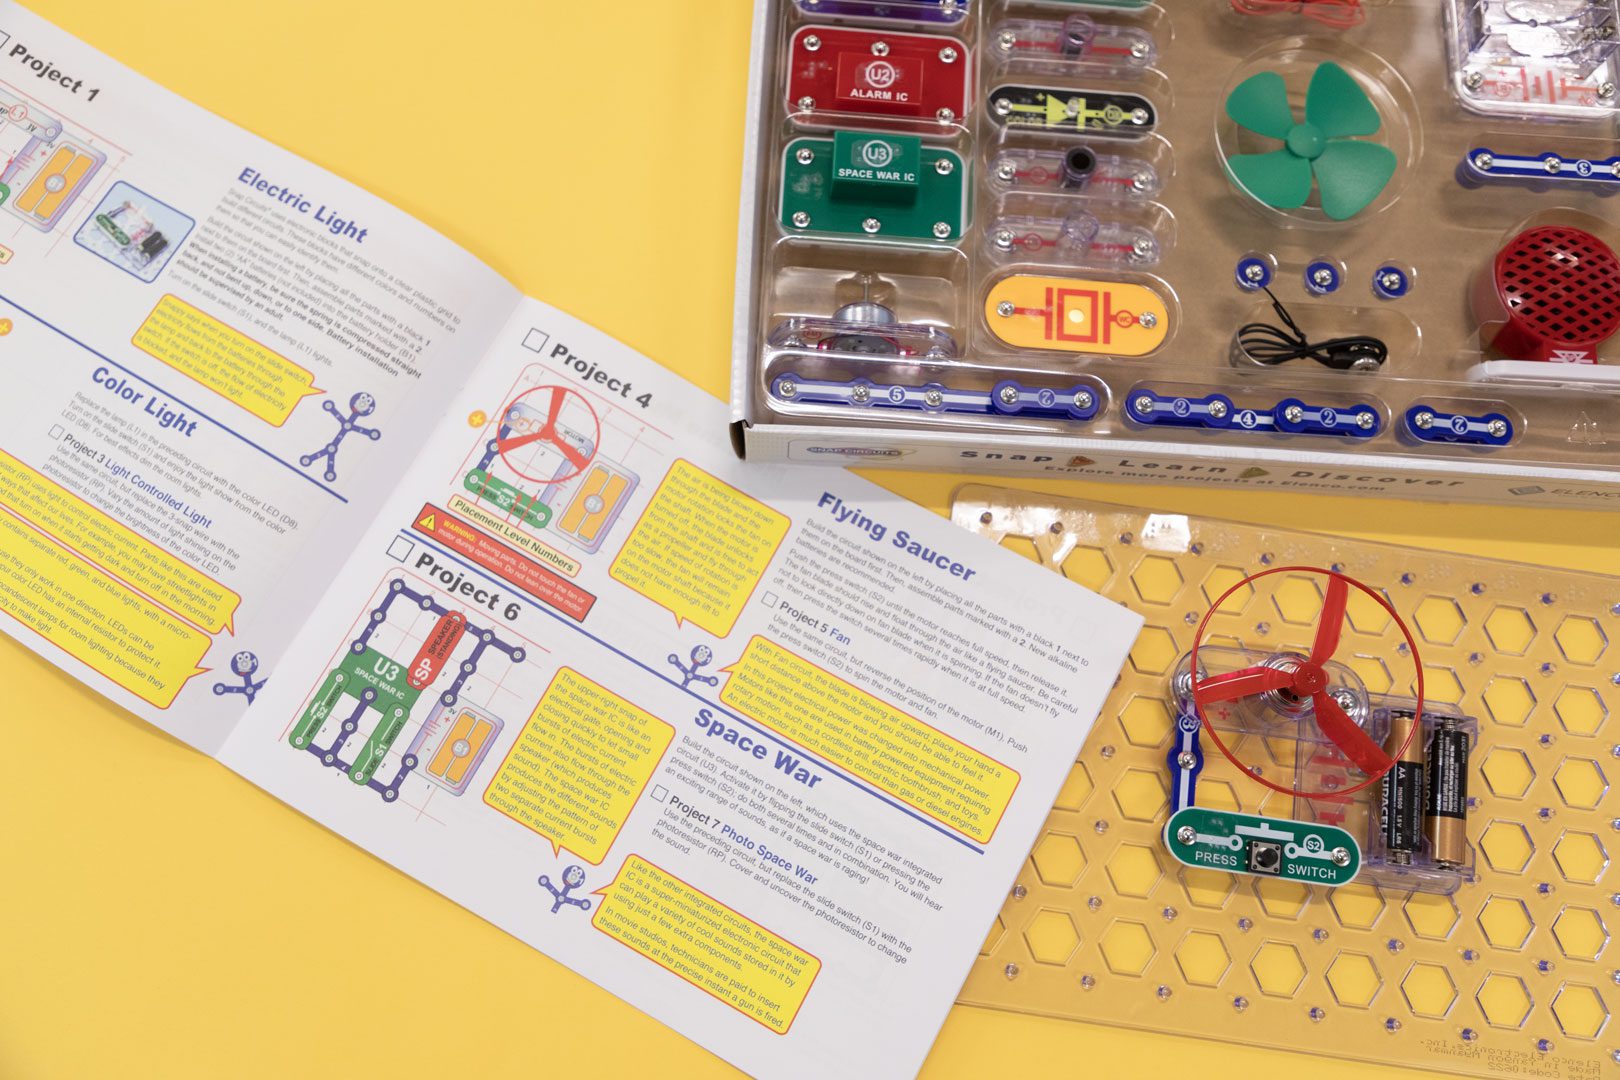 Snap Circuits Explore Coding Kit from Elenco Electronics